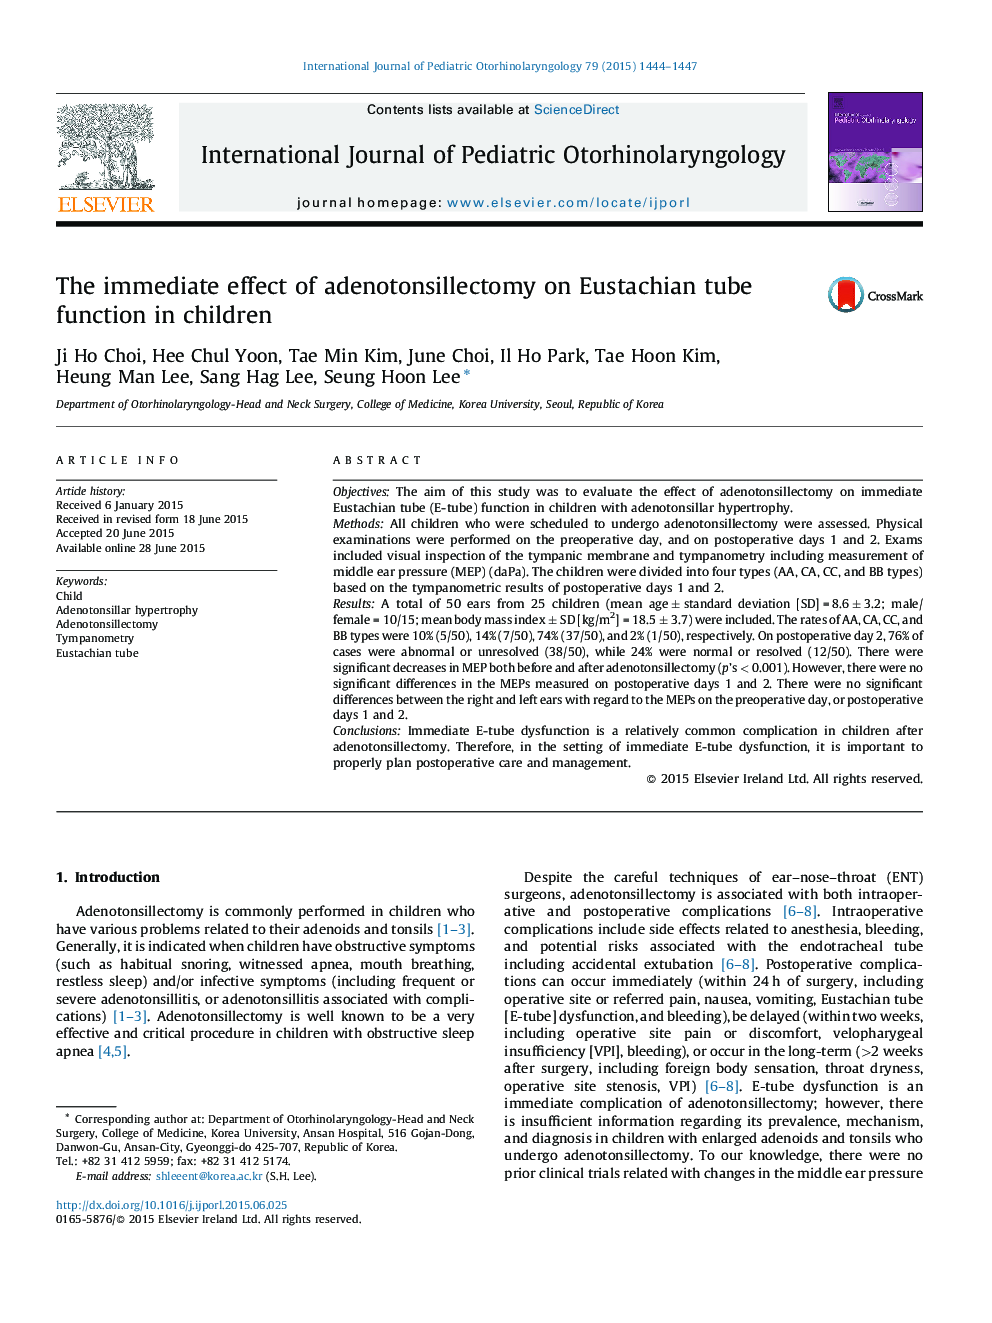 The immediate effect of adenotonsillectomy on Eustachian tube function in children